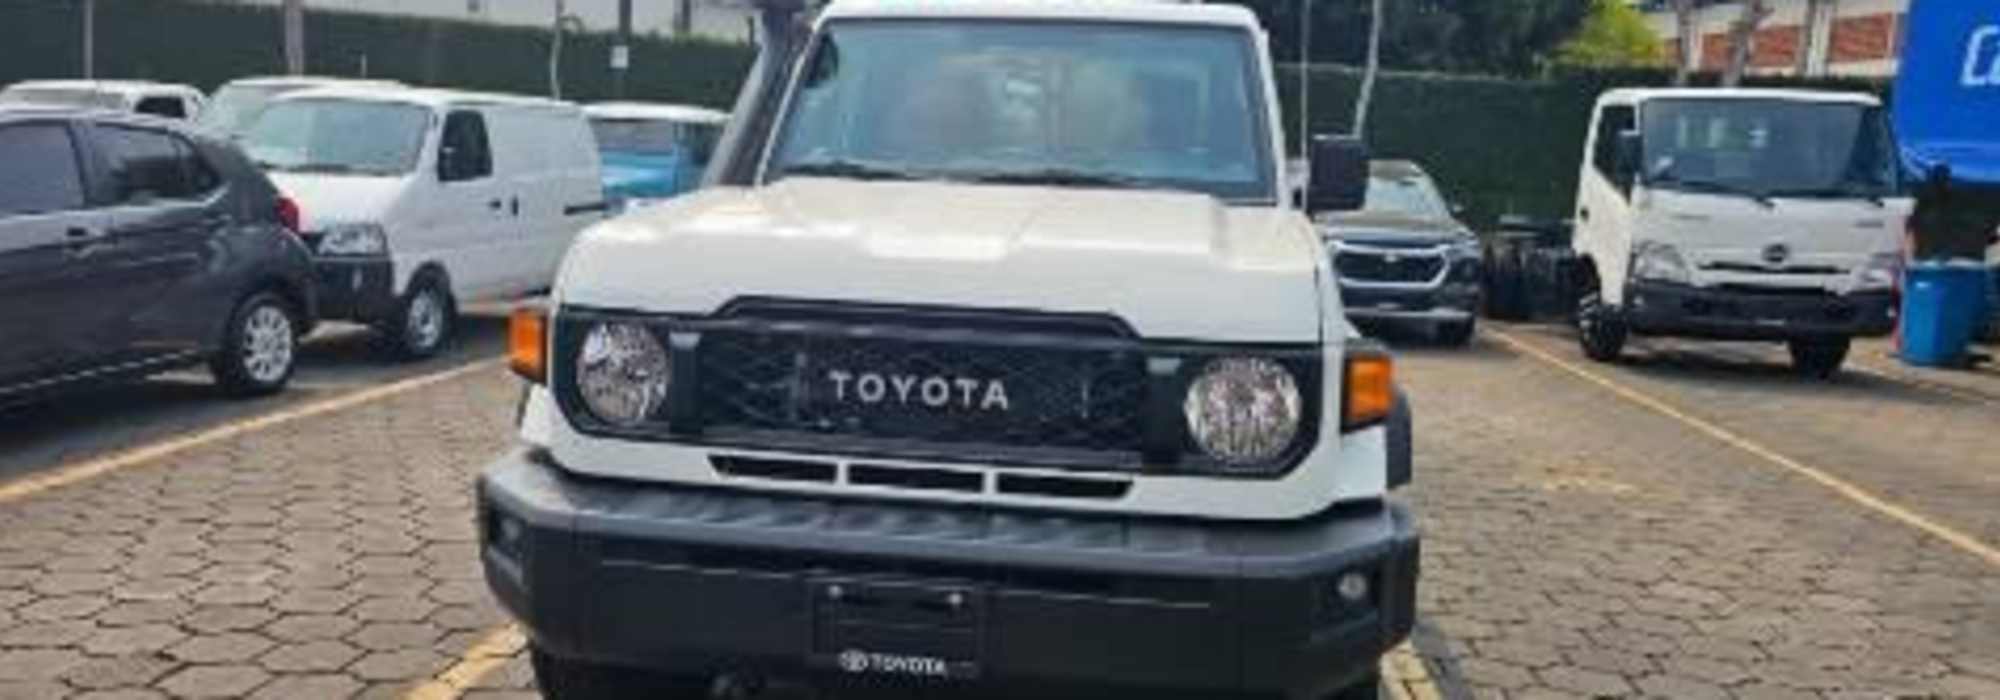 Toyota Land Cruiser from 